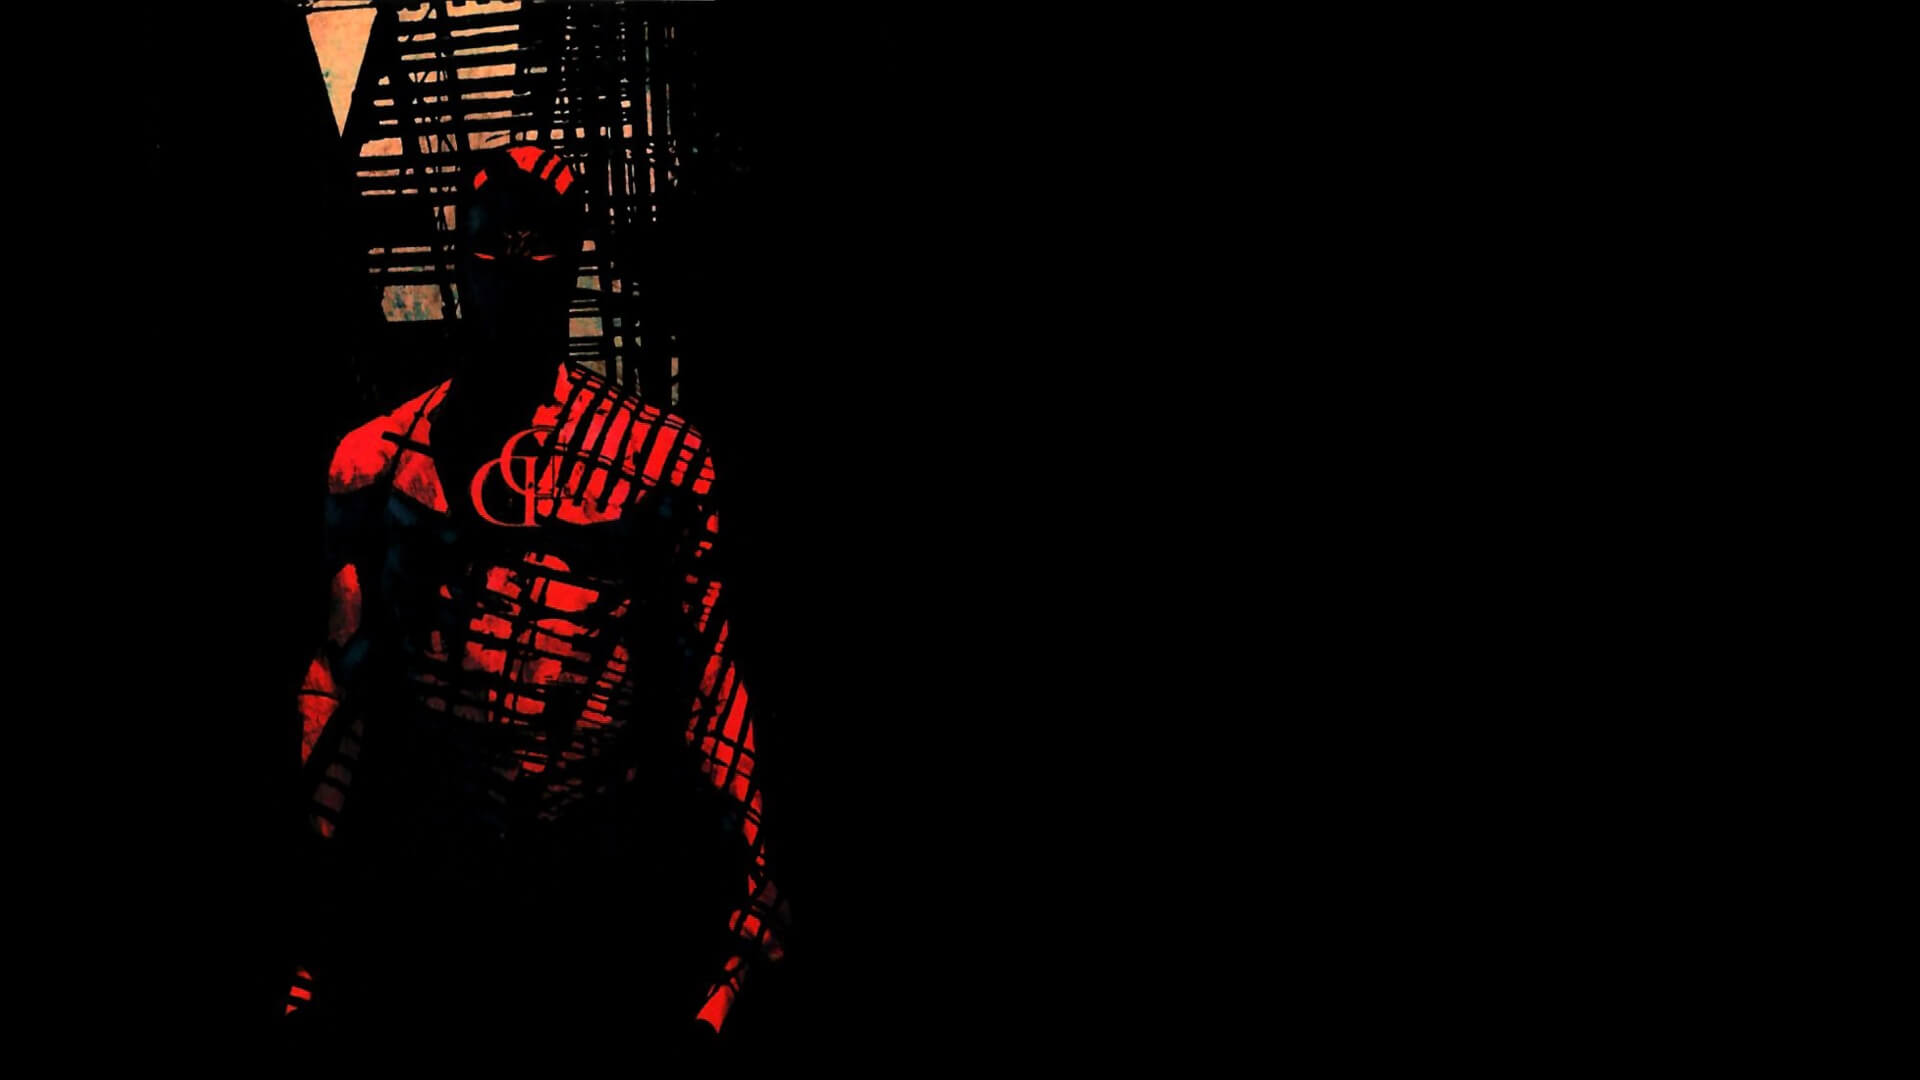 draufgänger wallpaper android,schwarz,dunkelheit,rot,erfundener charakter,zimmer